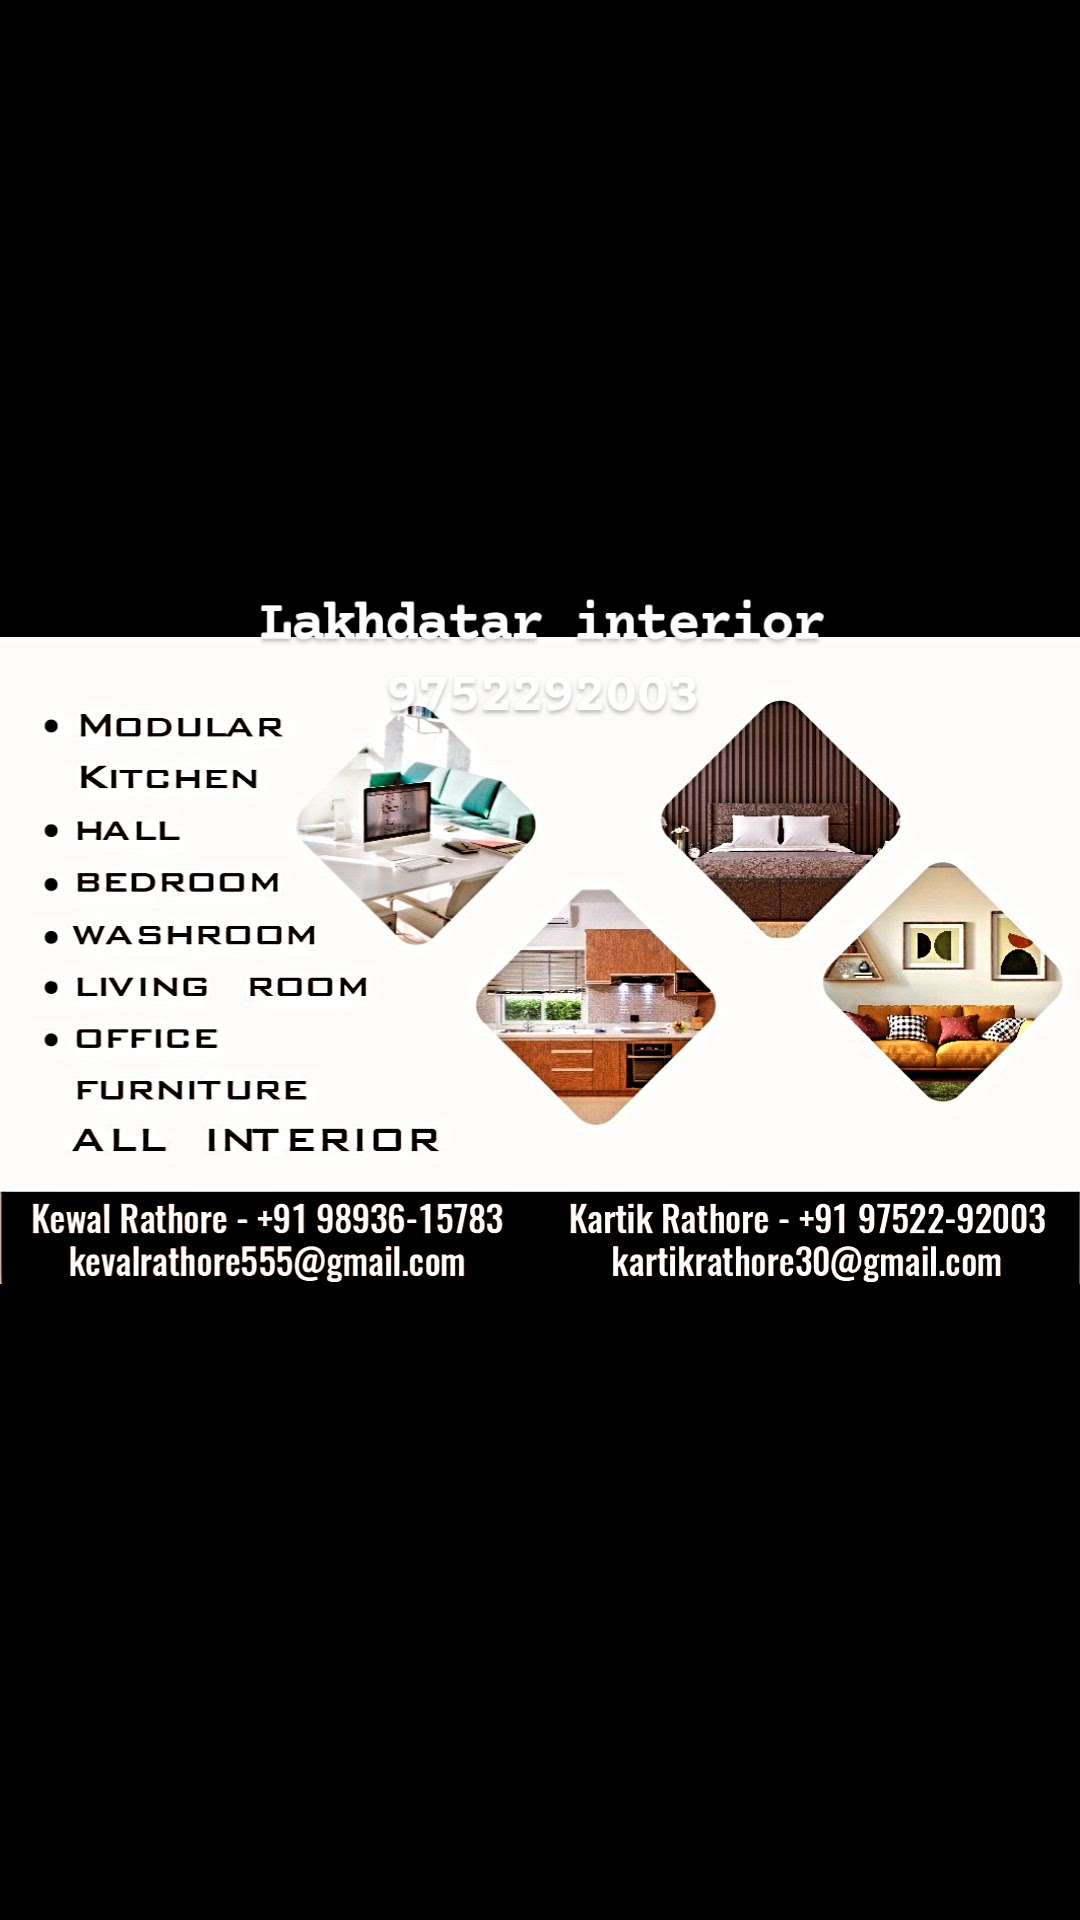 lakhdatar interior work
contact 9752292003
 #InteriorDesigner